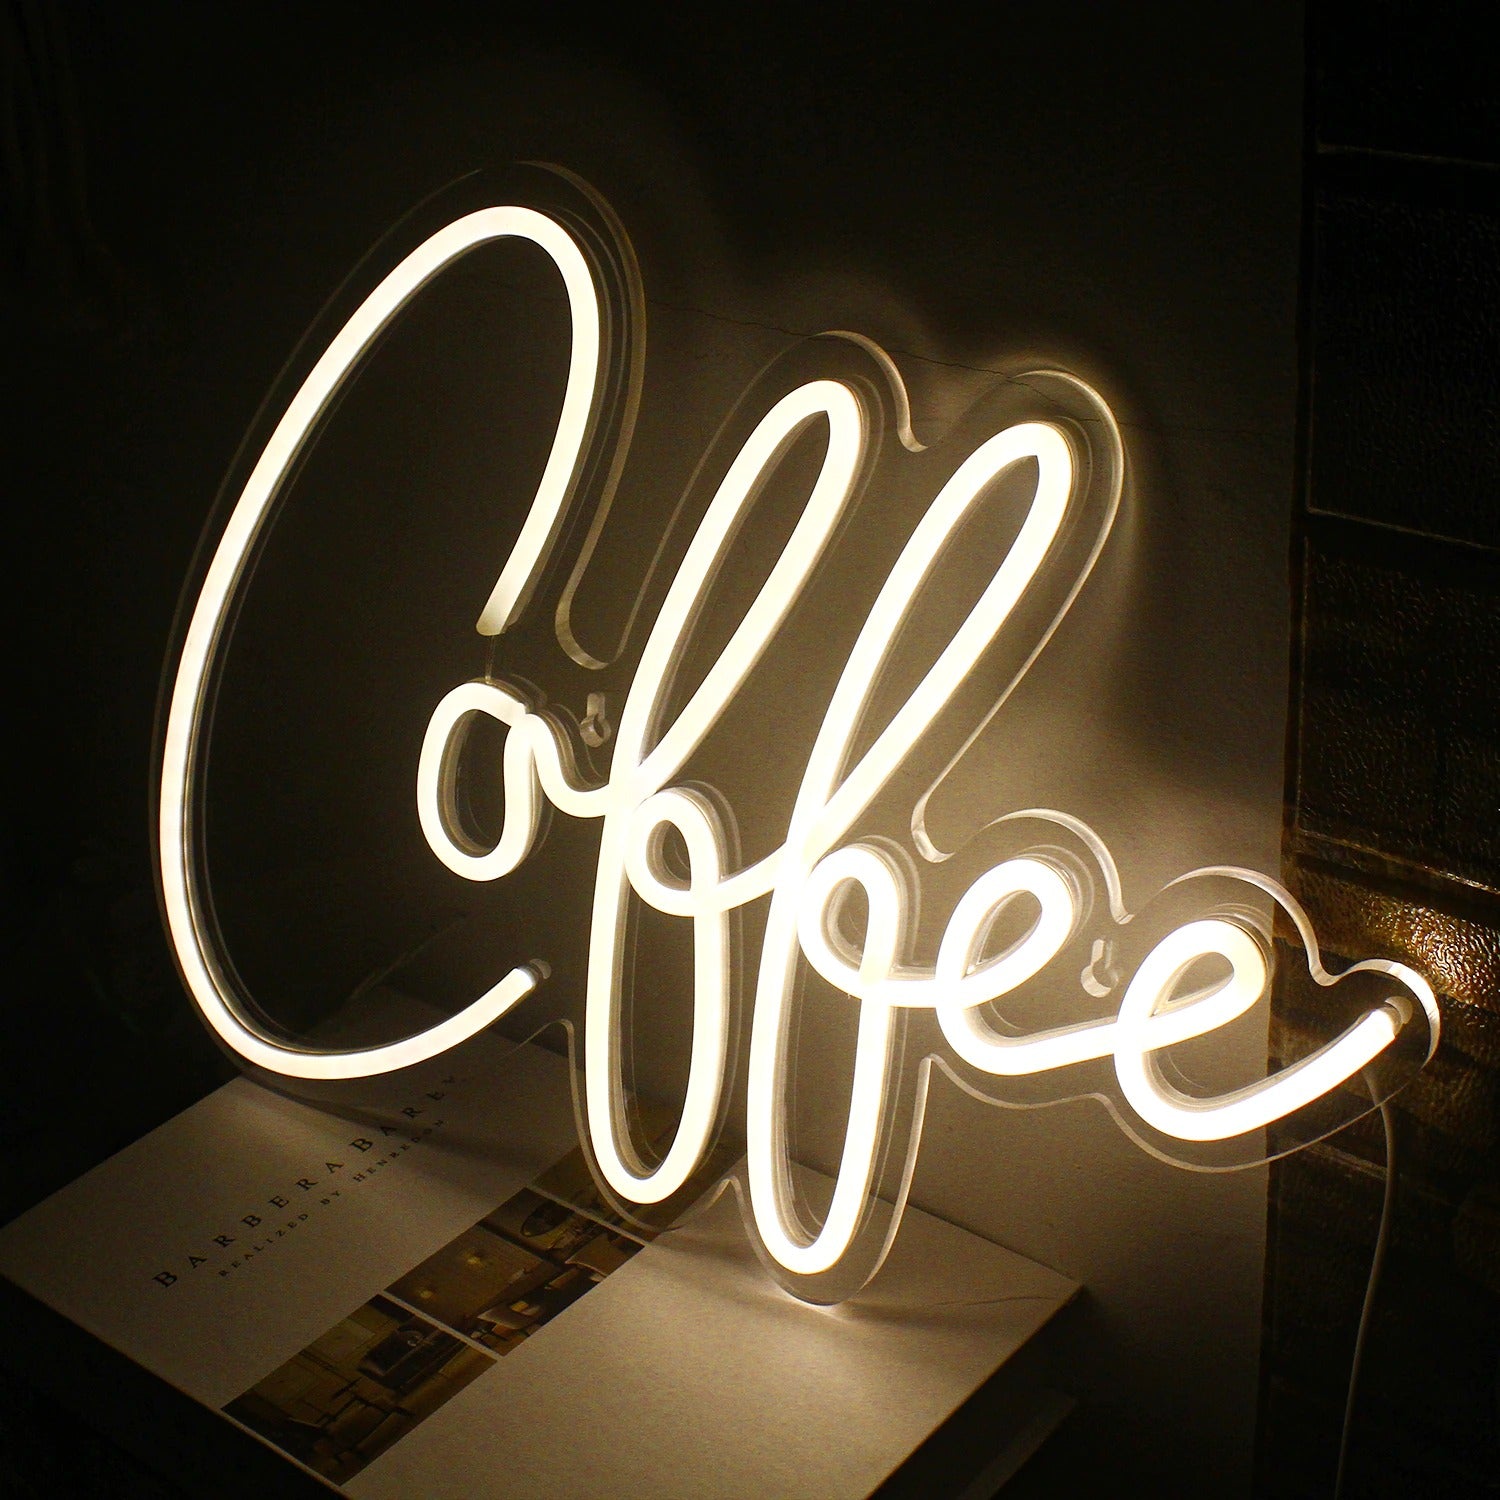 Coffee neon light can create a coffee brand image